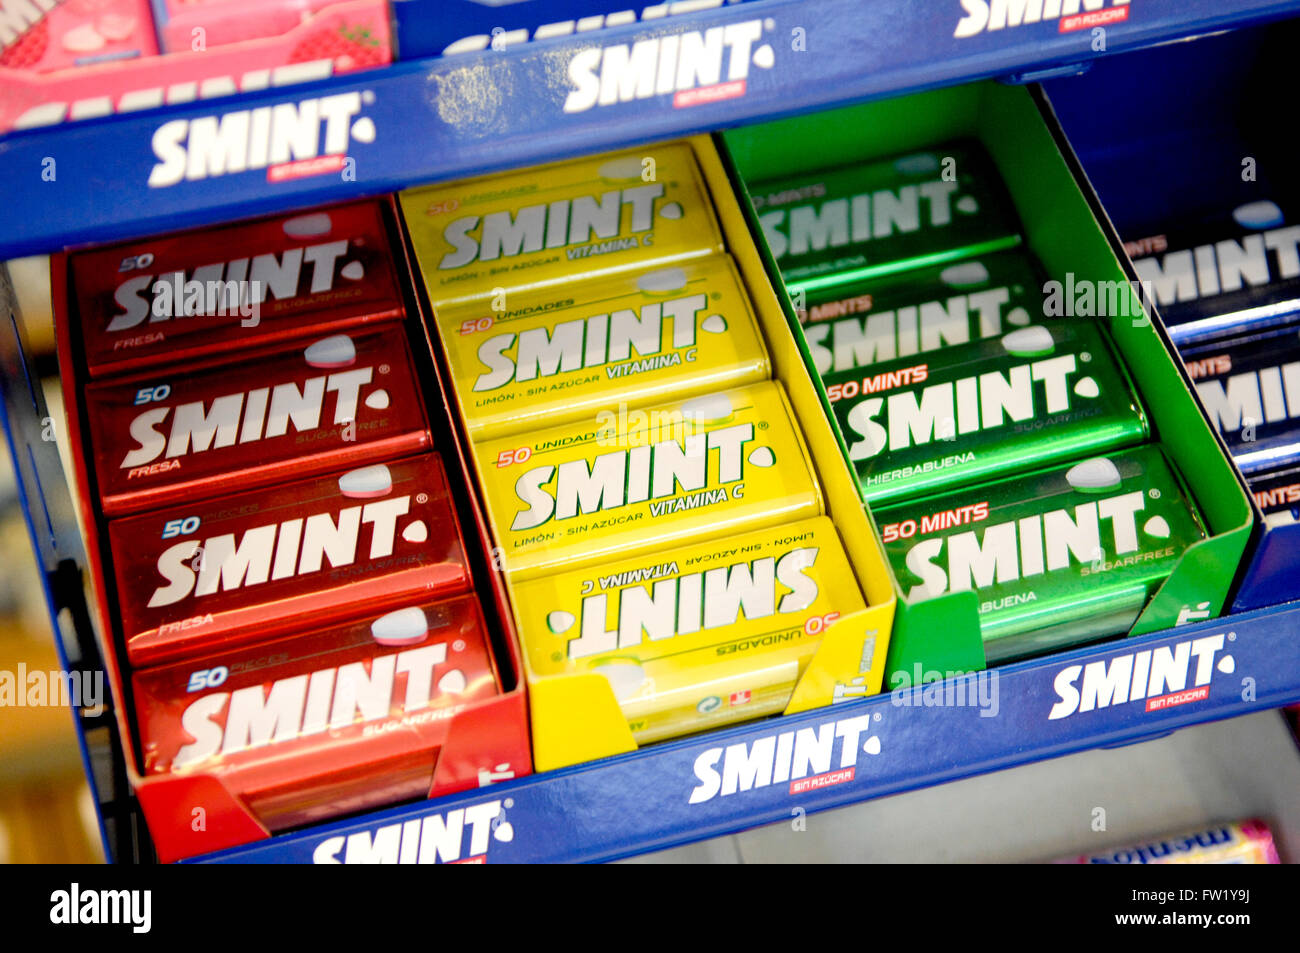 SMINT Atem Minze produziert durch spanische multinationale Chupa Chups. Stockfoto